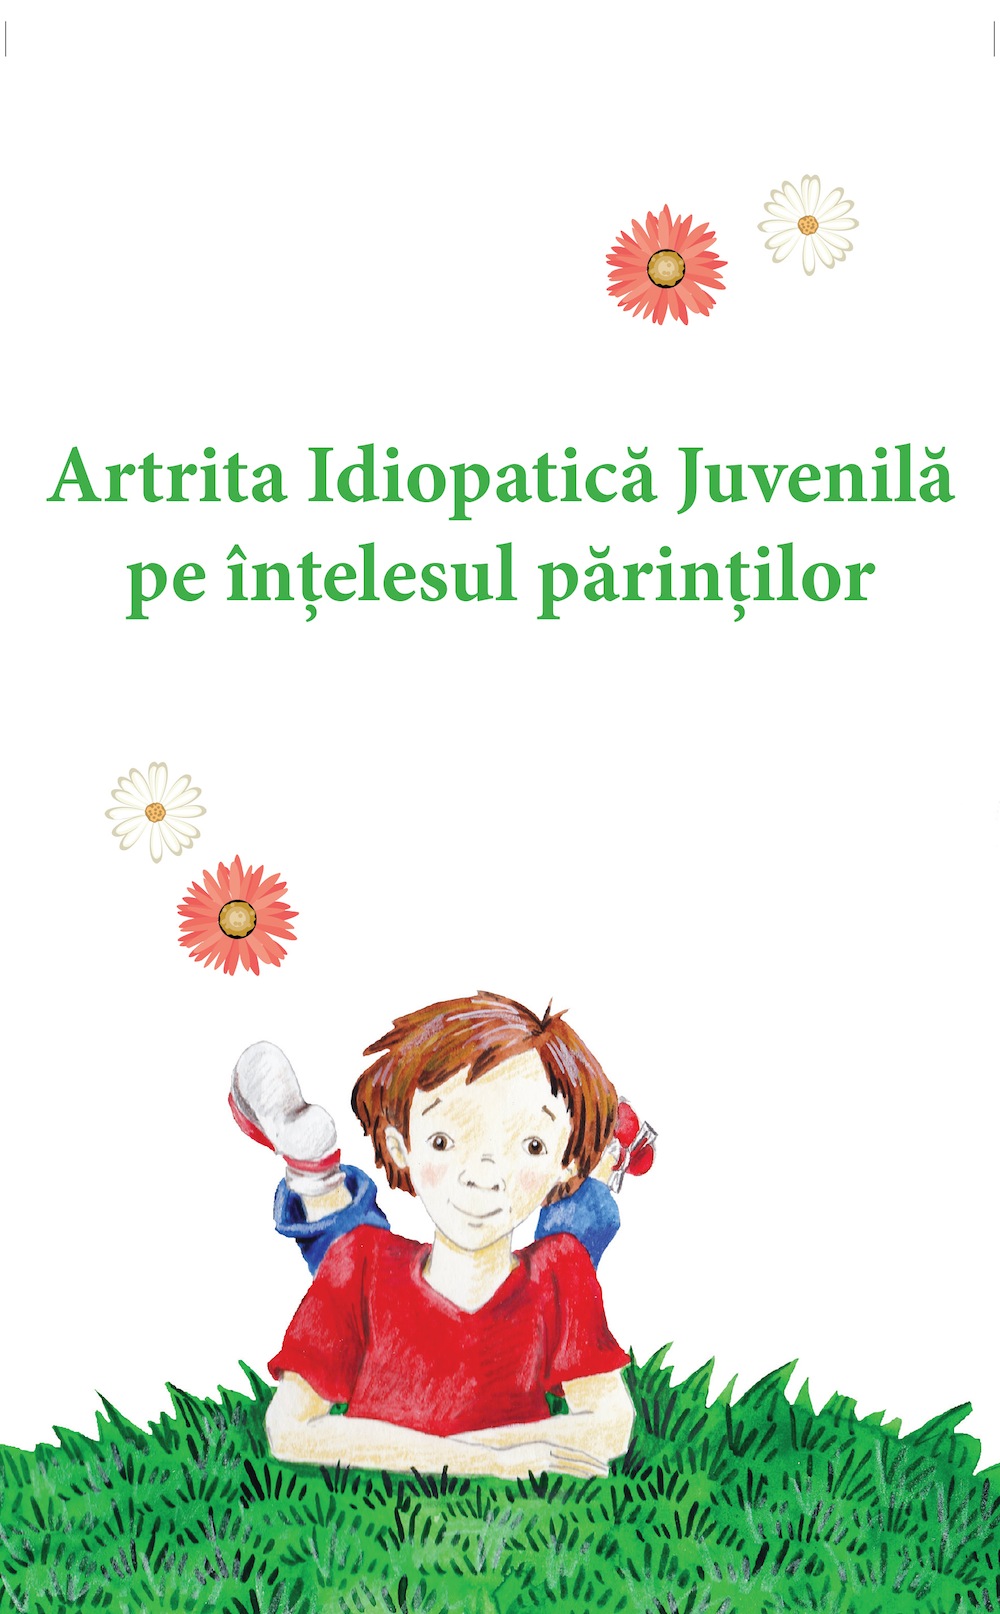 protocol artrita idiopatica juvenila)